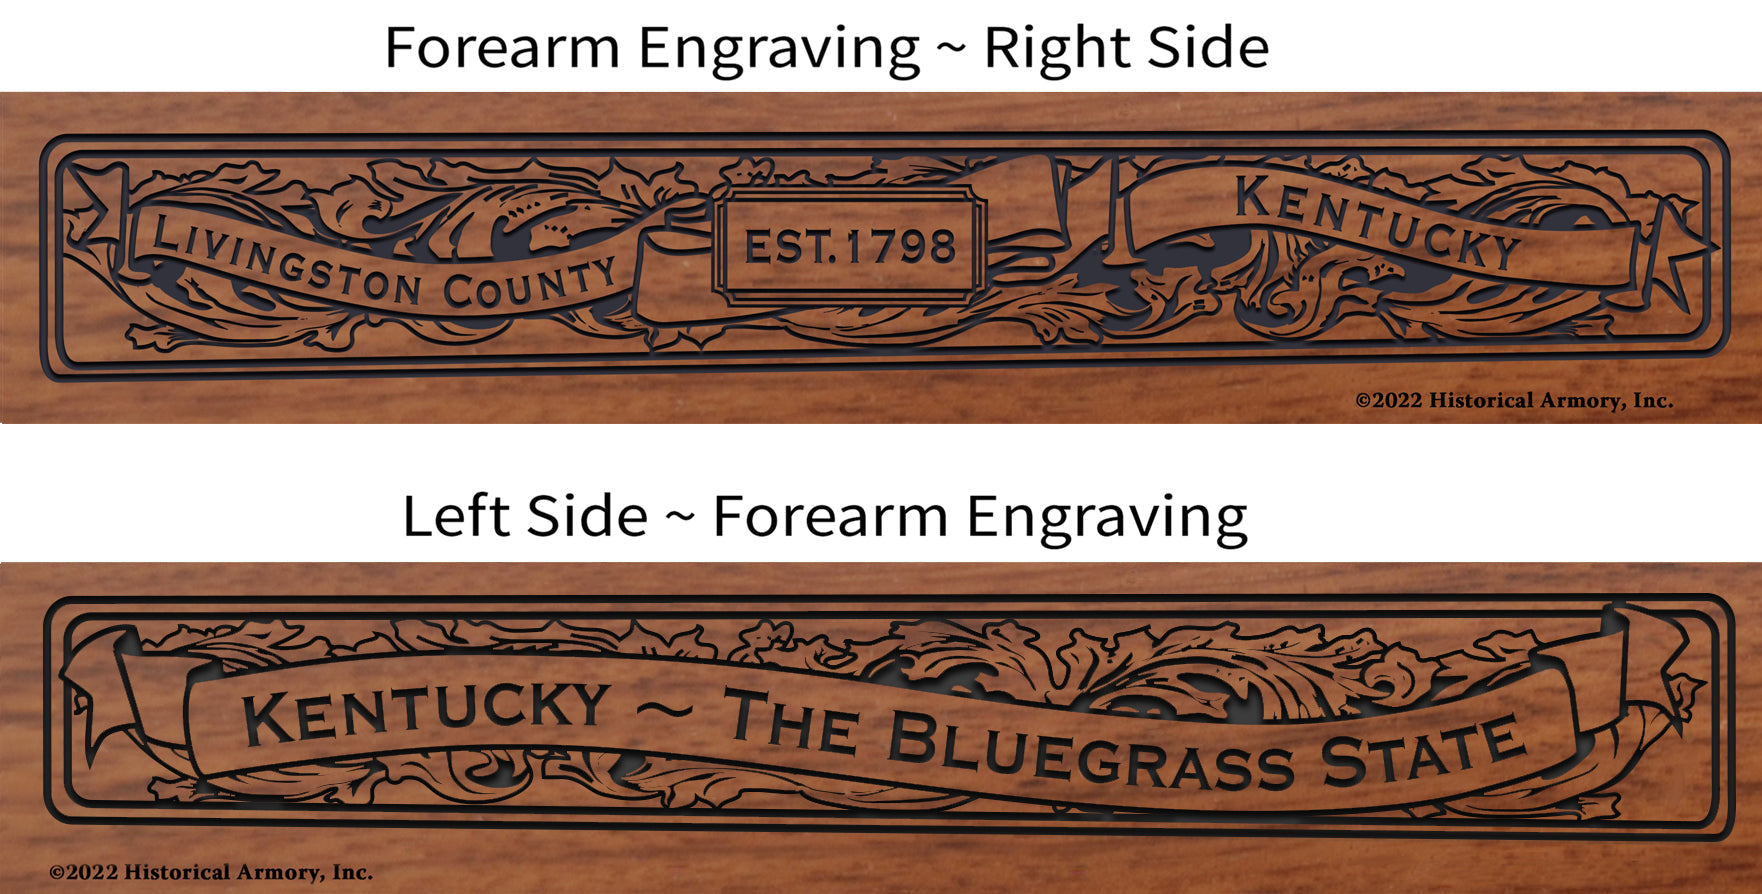 Livingston County Kentucky Engraved Rifle Forearm